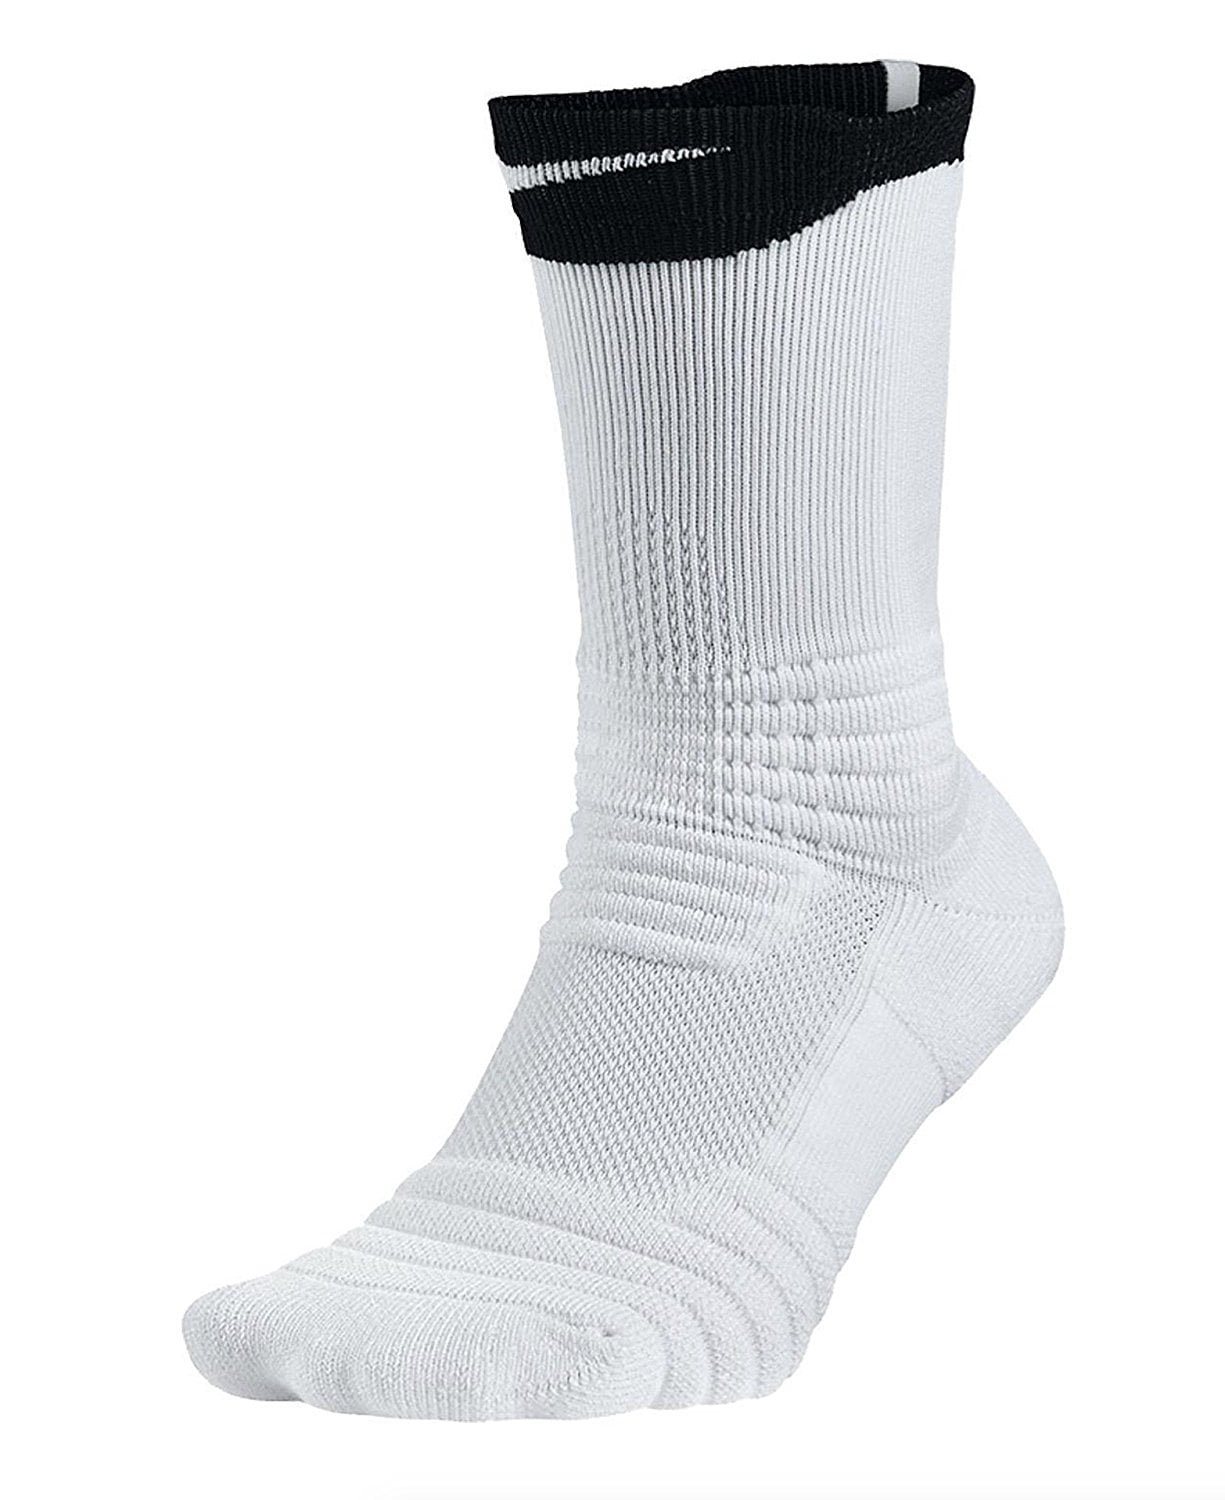 Nike Elite Versatility Crew Basketball Socks-Black/White - Walmart.com